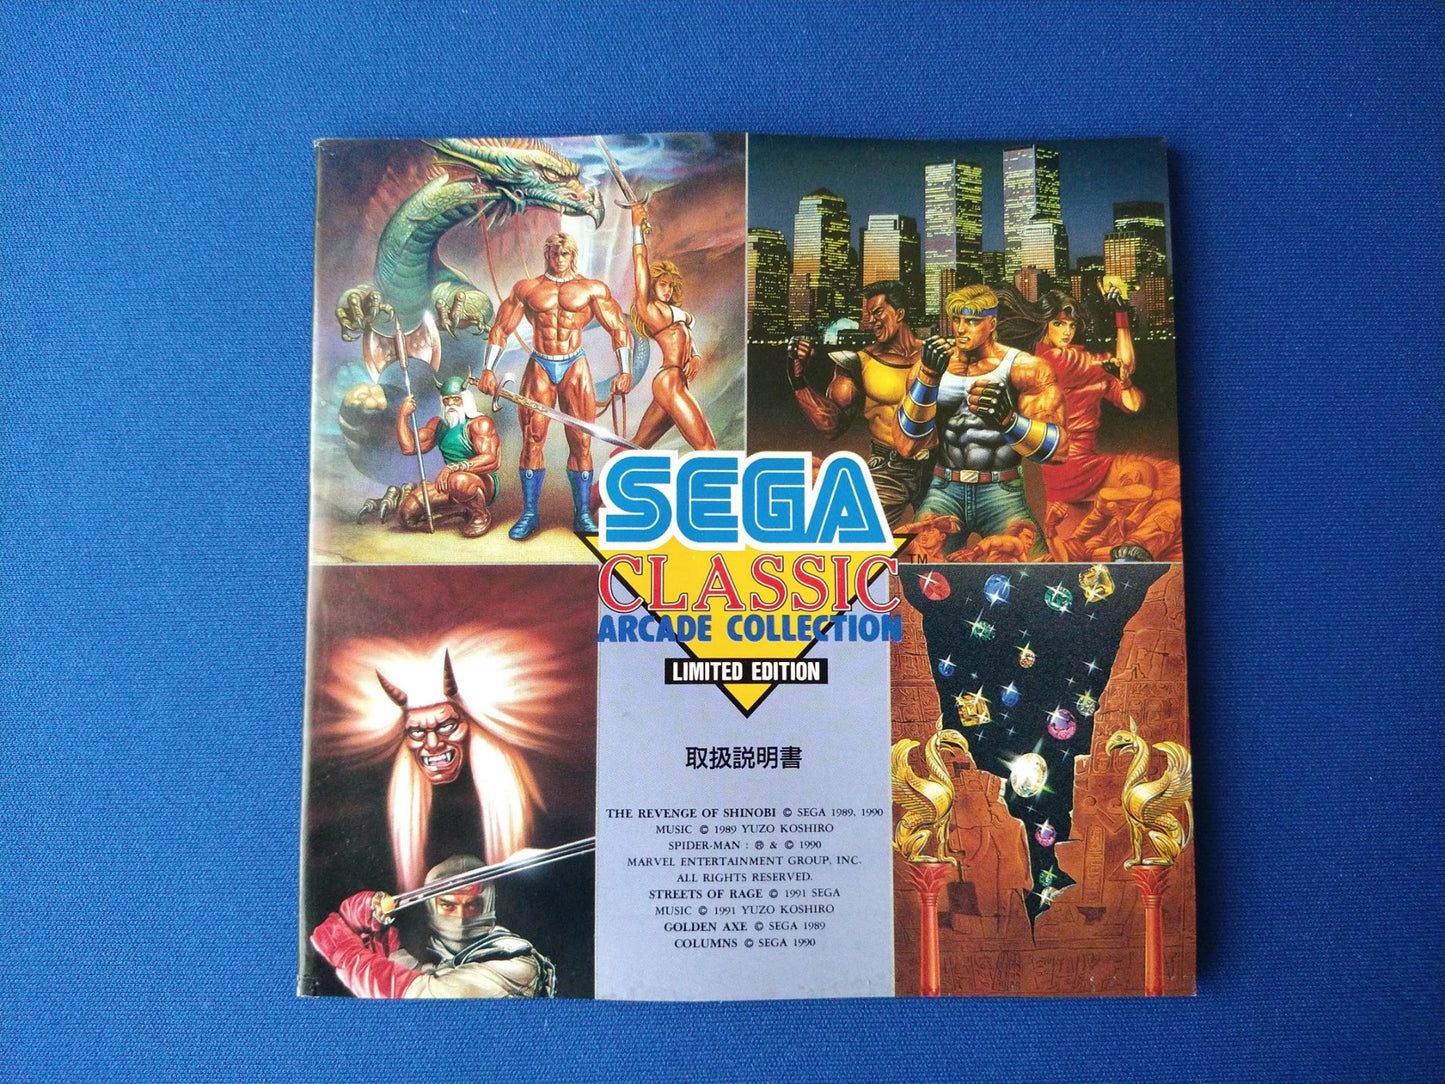 SEGA CLASSIC Arcade Collection MEGA CD shooter game Disk, Manual, Box set-f0524-